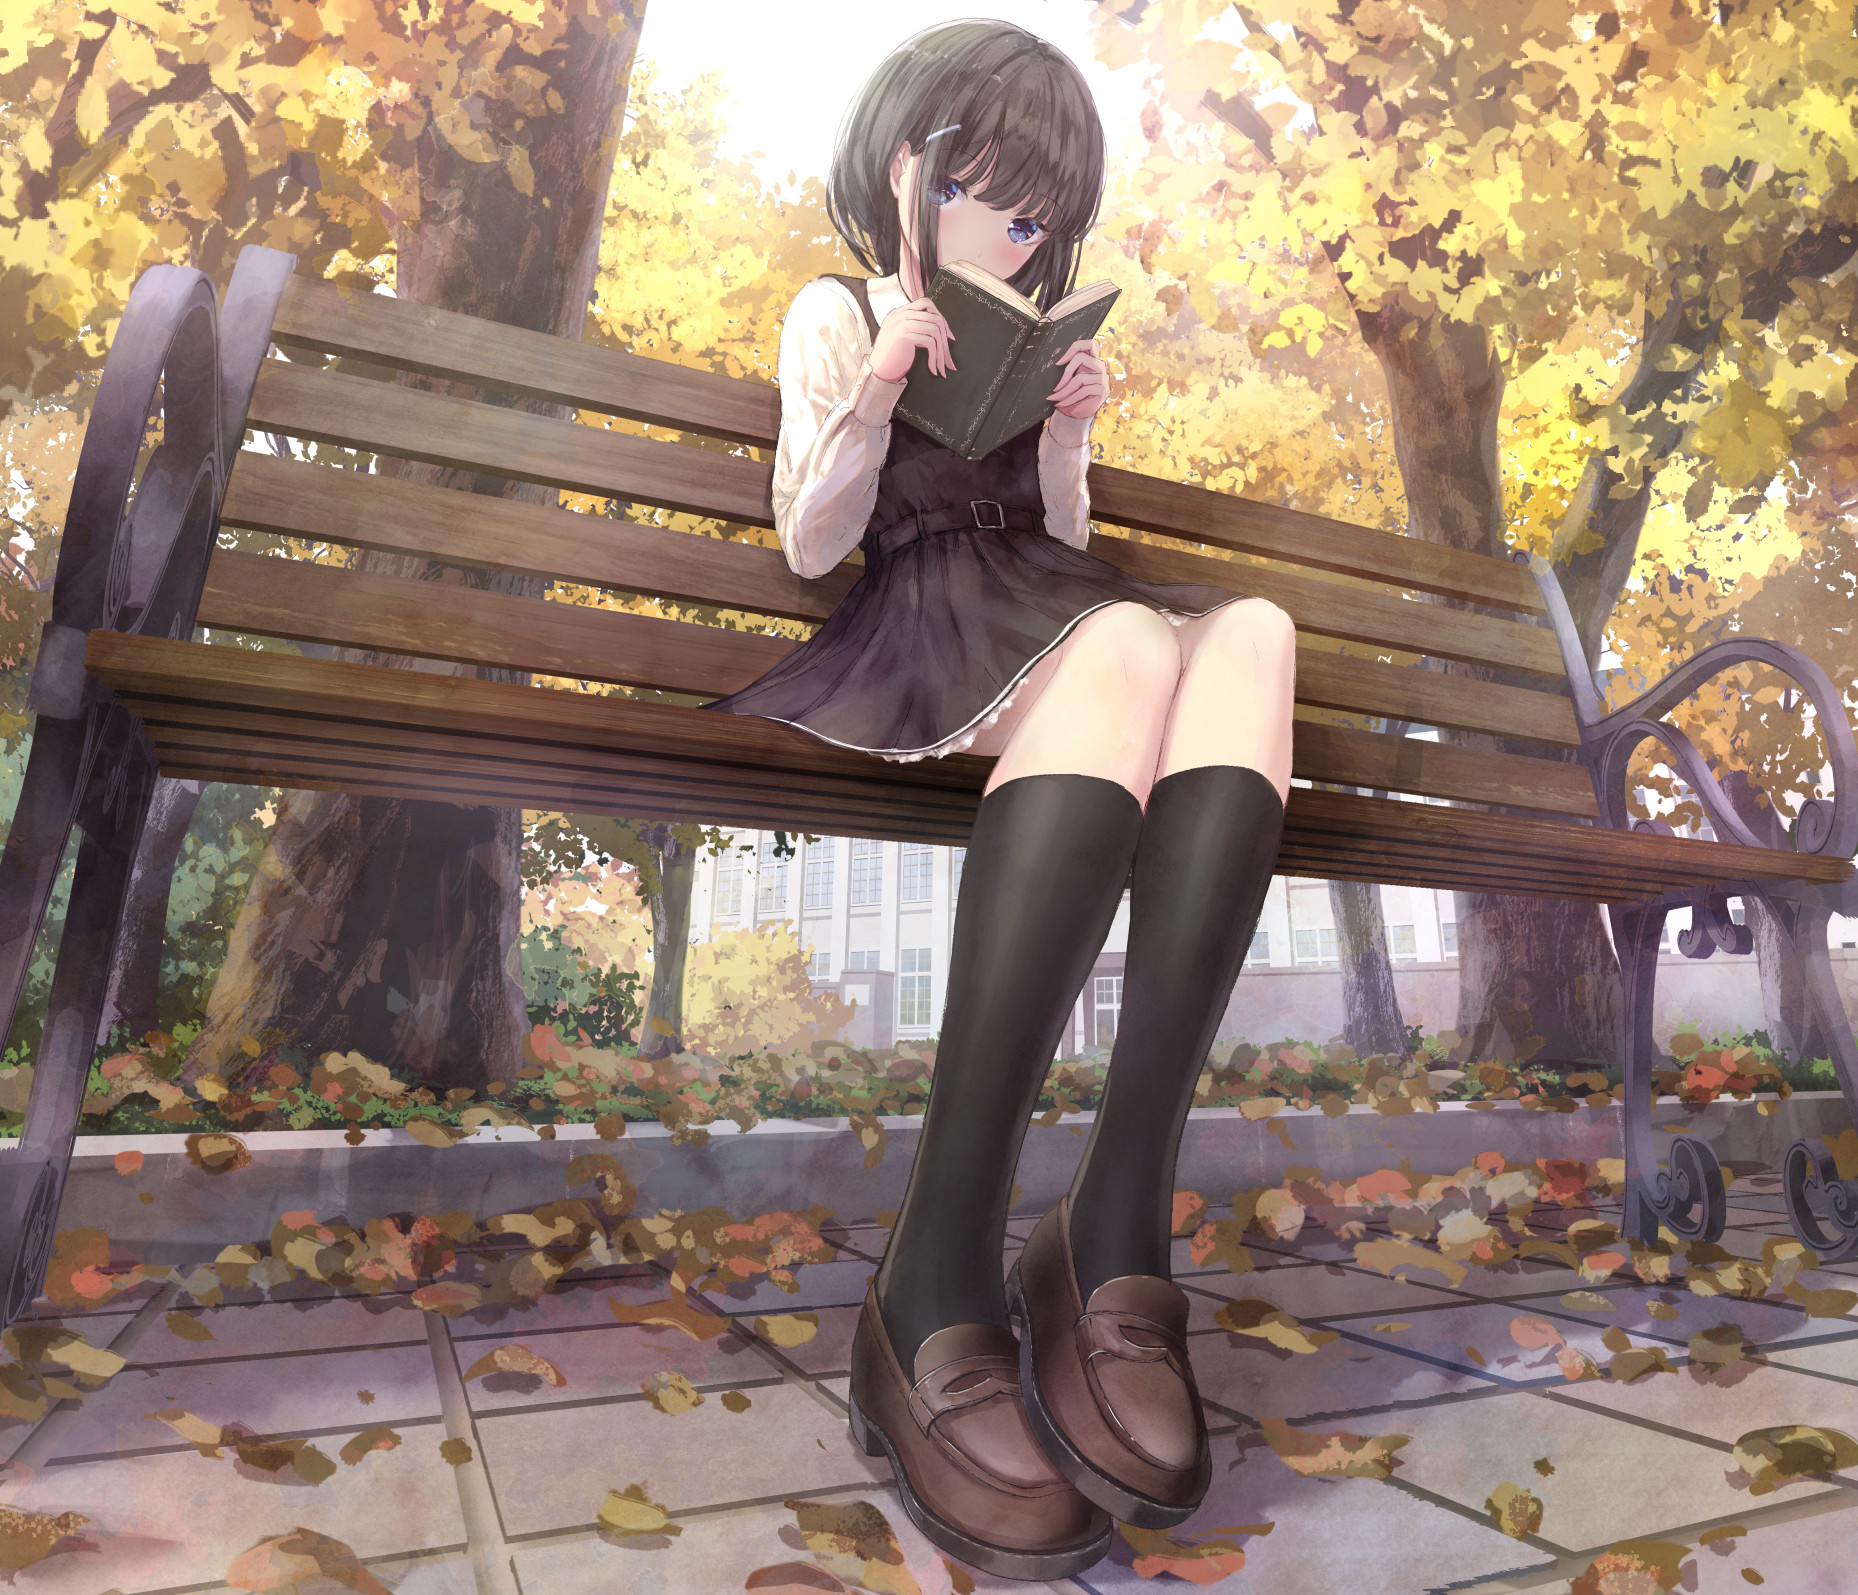 Anime 1858x1595 anime anime girls digital art artwork 2D portrait display fall bench books missile228